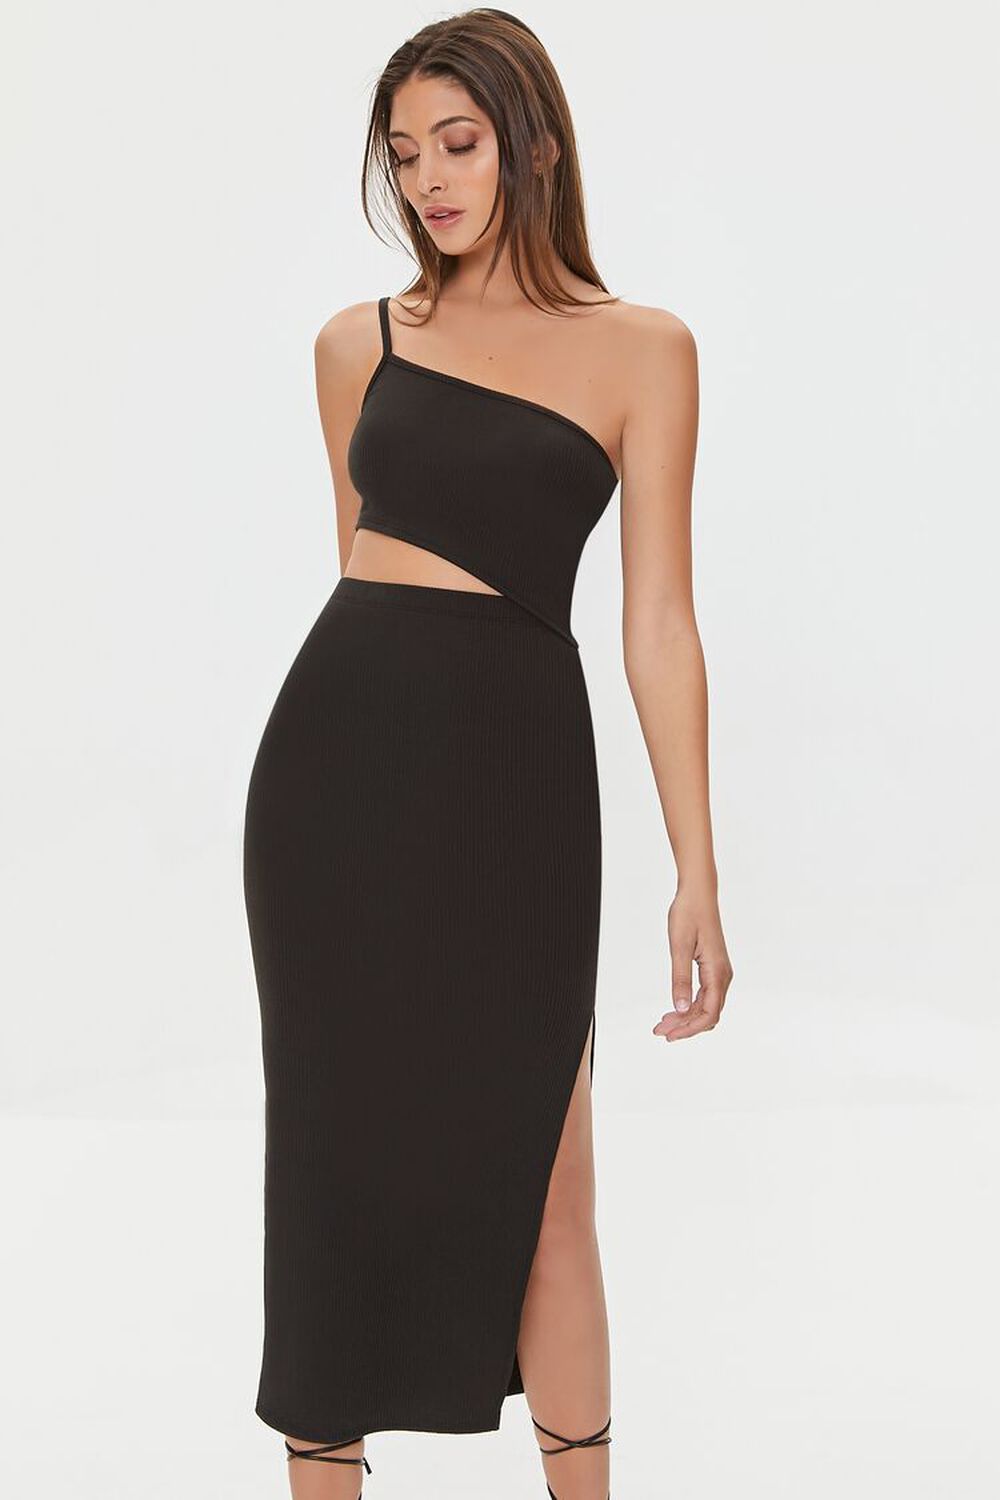 BLACK One-Shoulder Cami Midi Dress, image 1